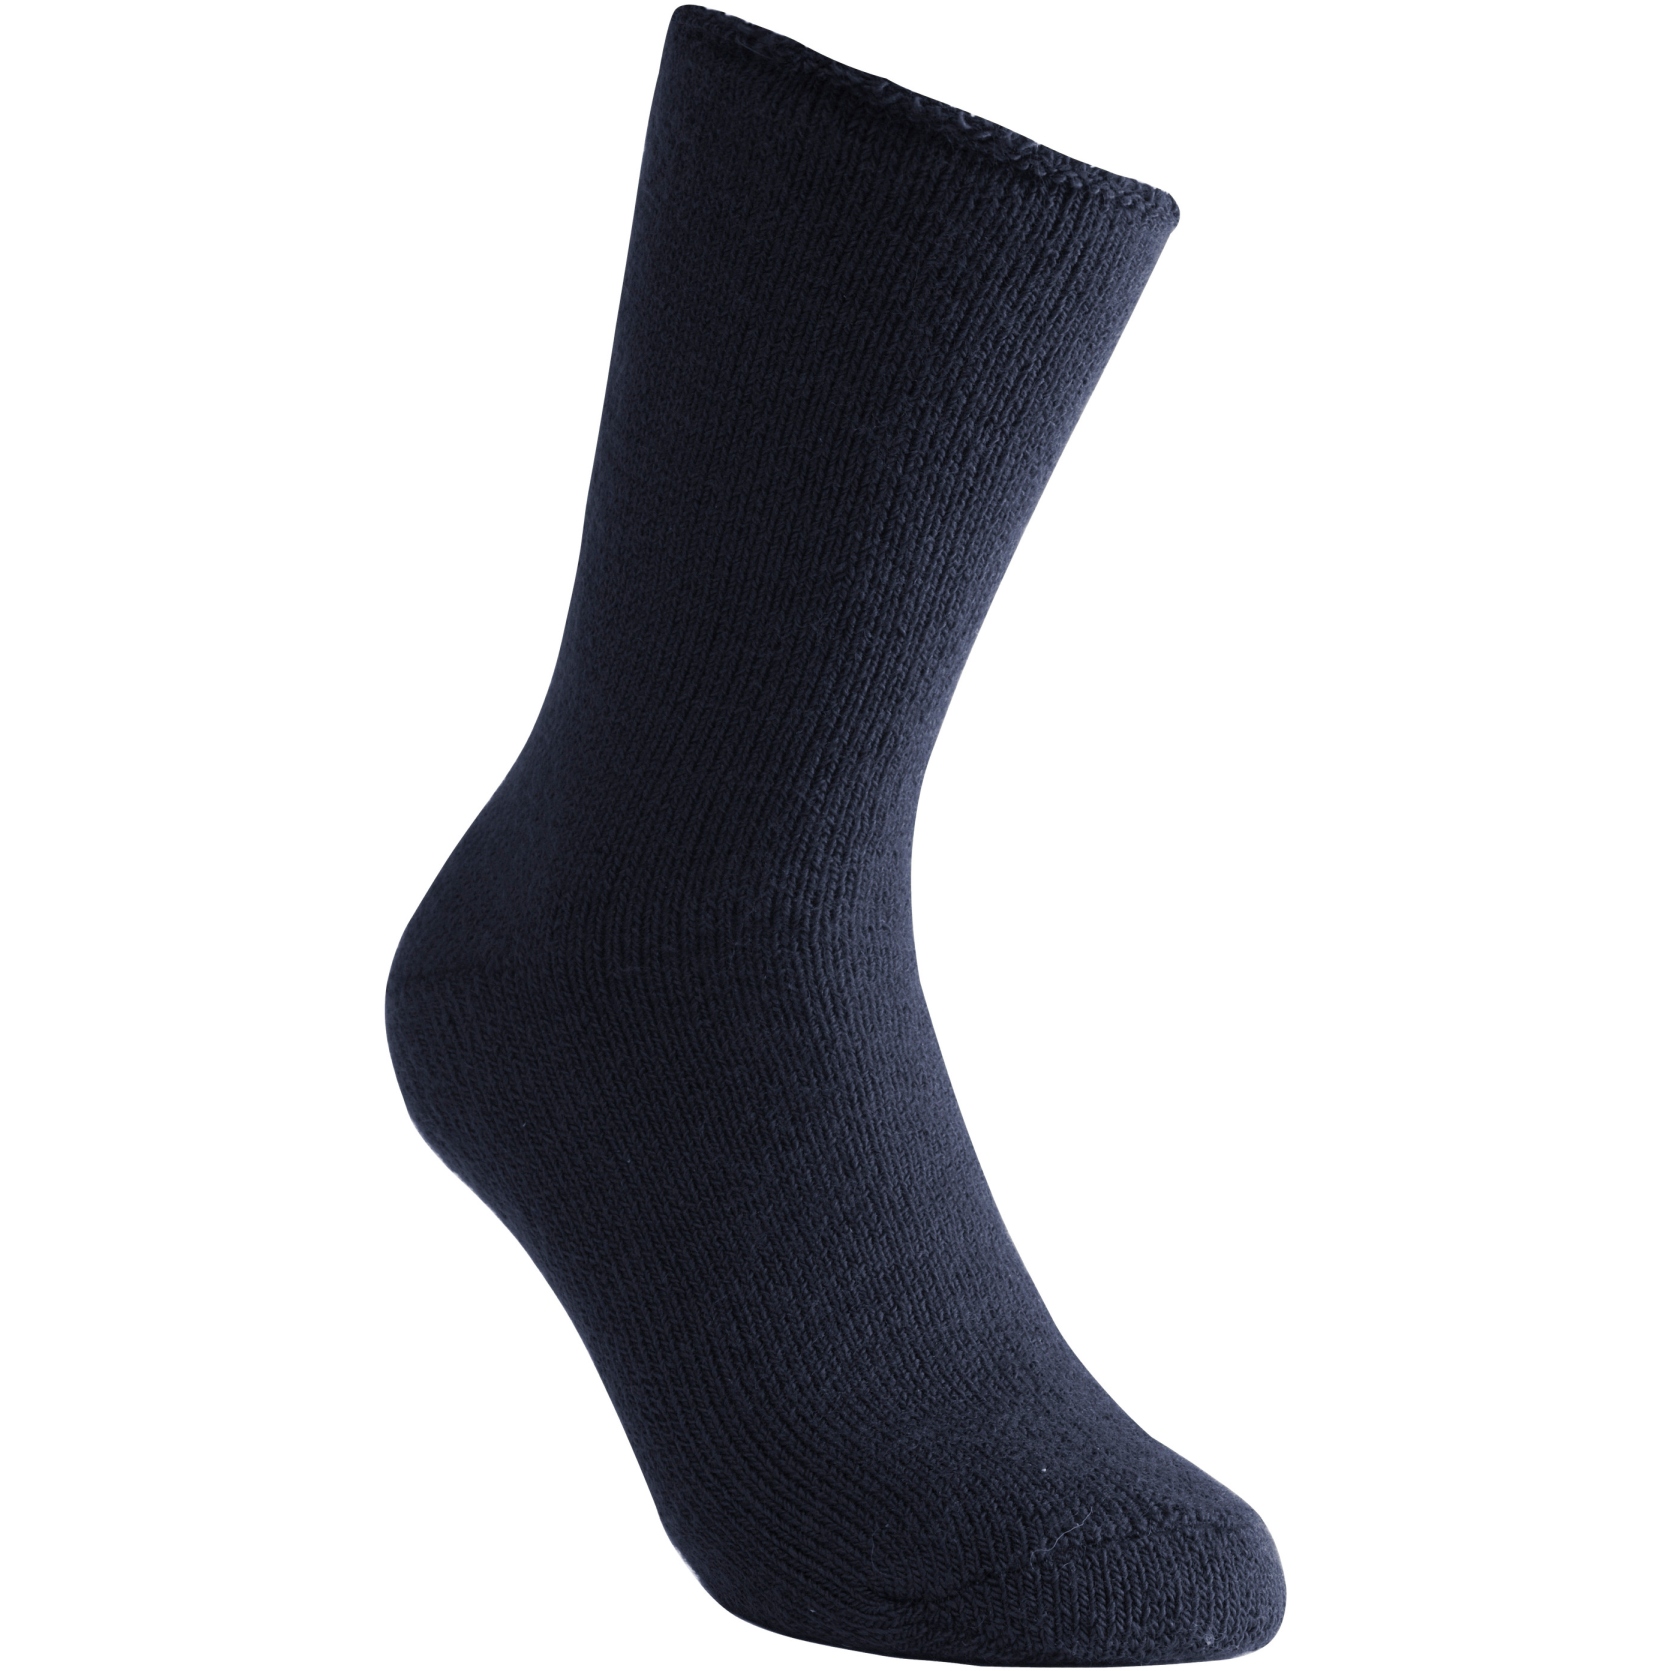 Productfoto van Woolpower Classic 600 Socks - dark navy